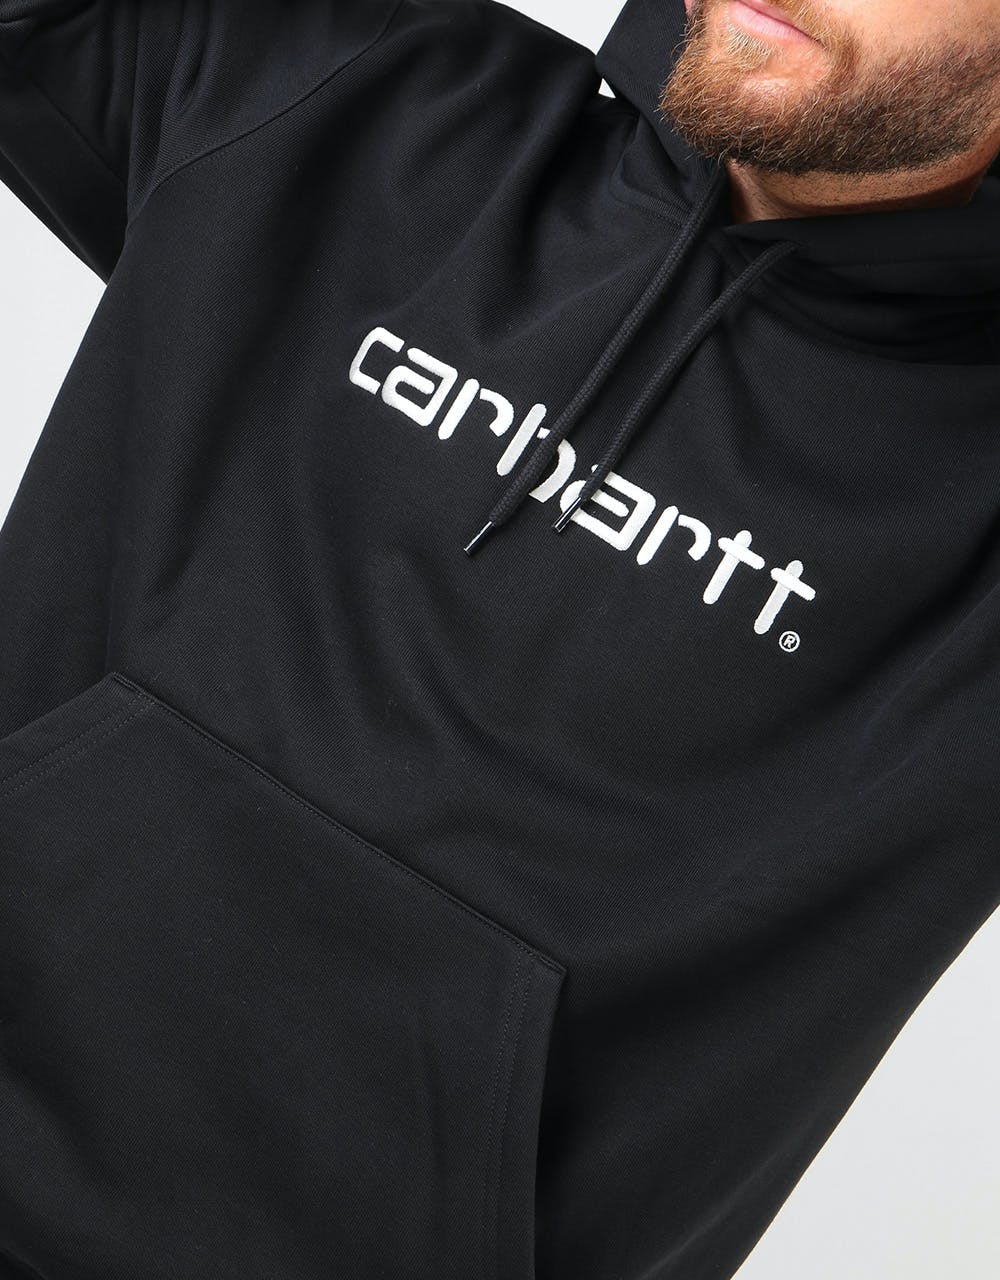 Carhartt WIP Hooded Sweatshirt - Black / White